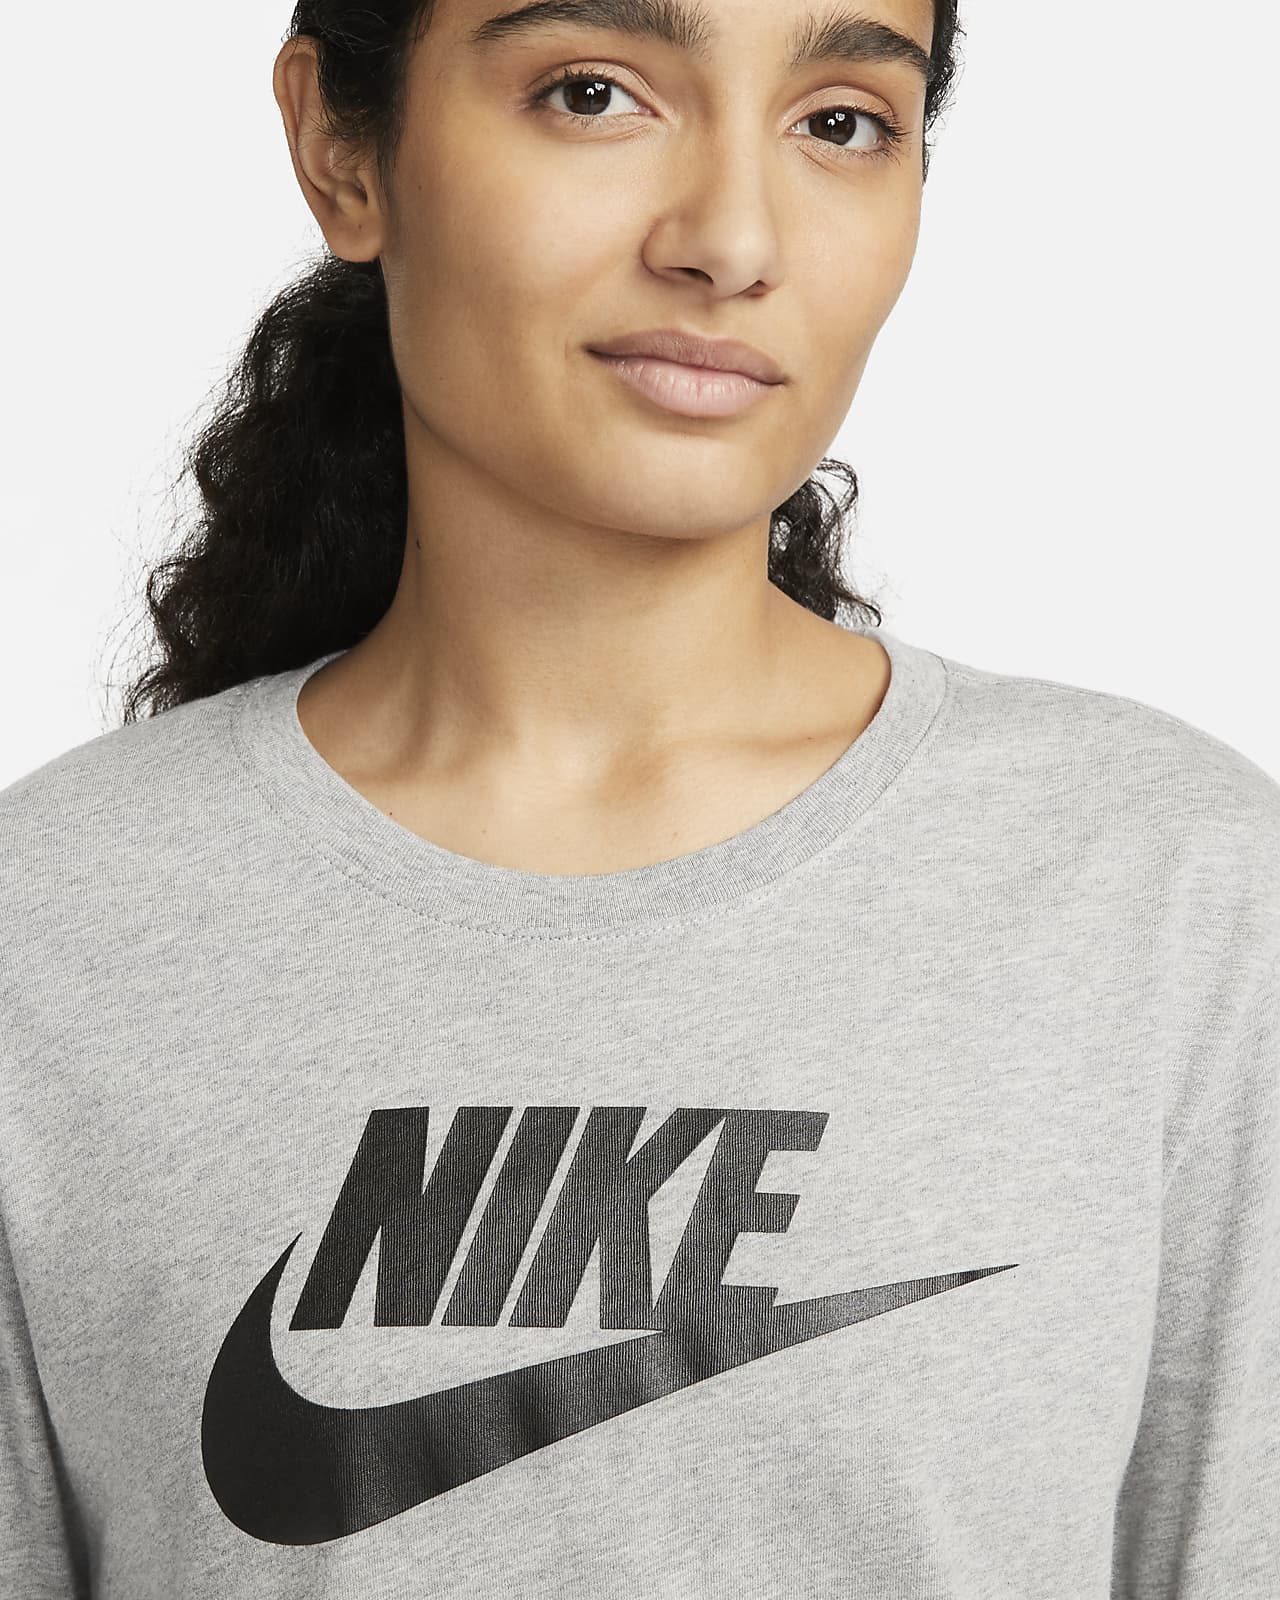 Nike Sportswear Essentials Women\'s Long-Sleeve Logo T-Shirt.